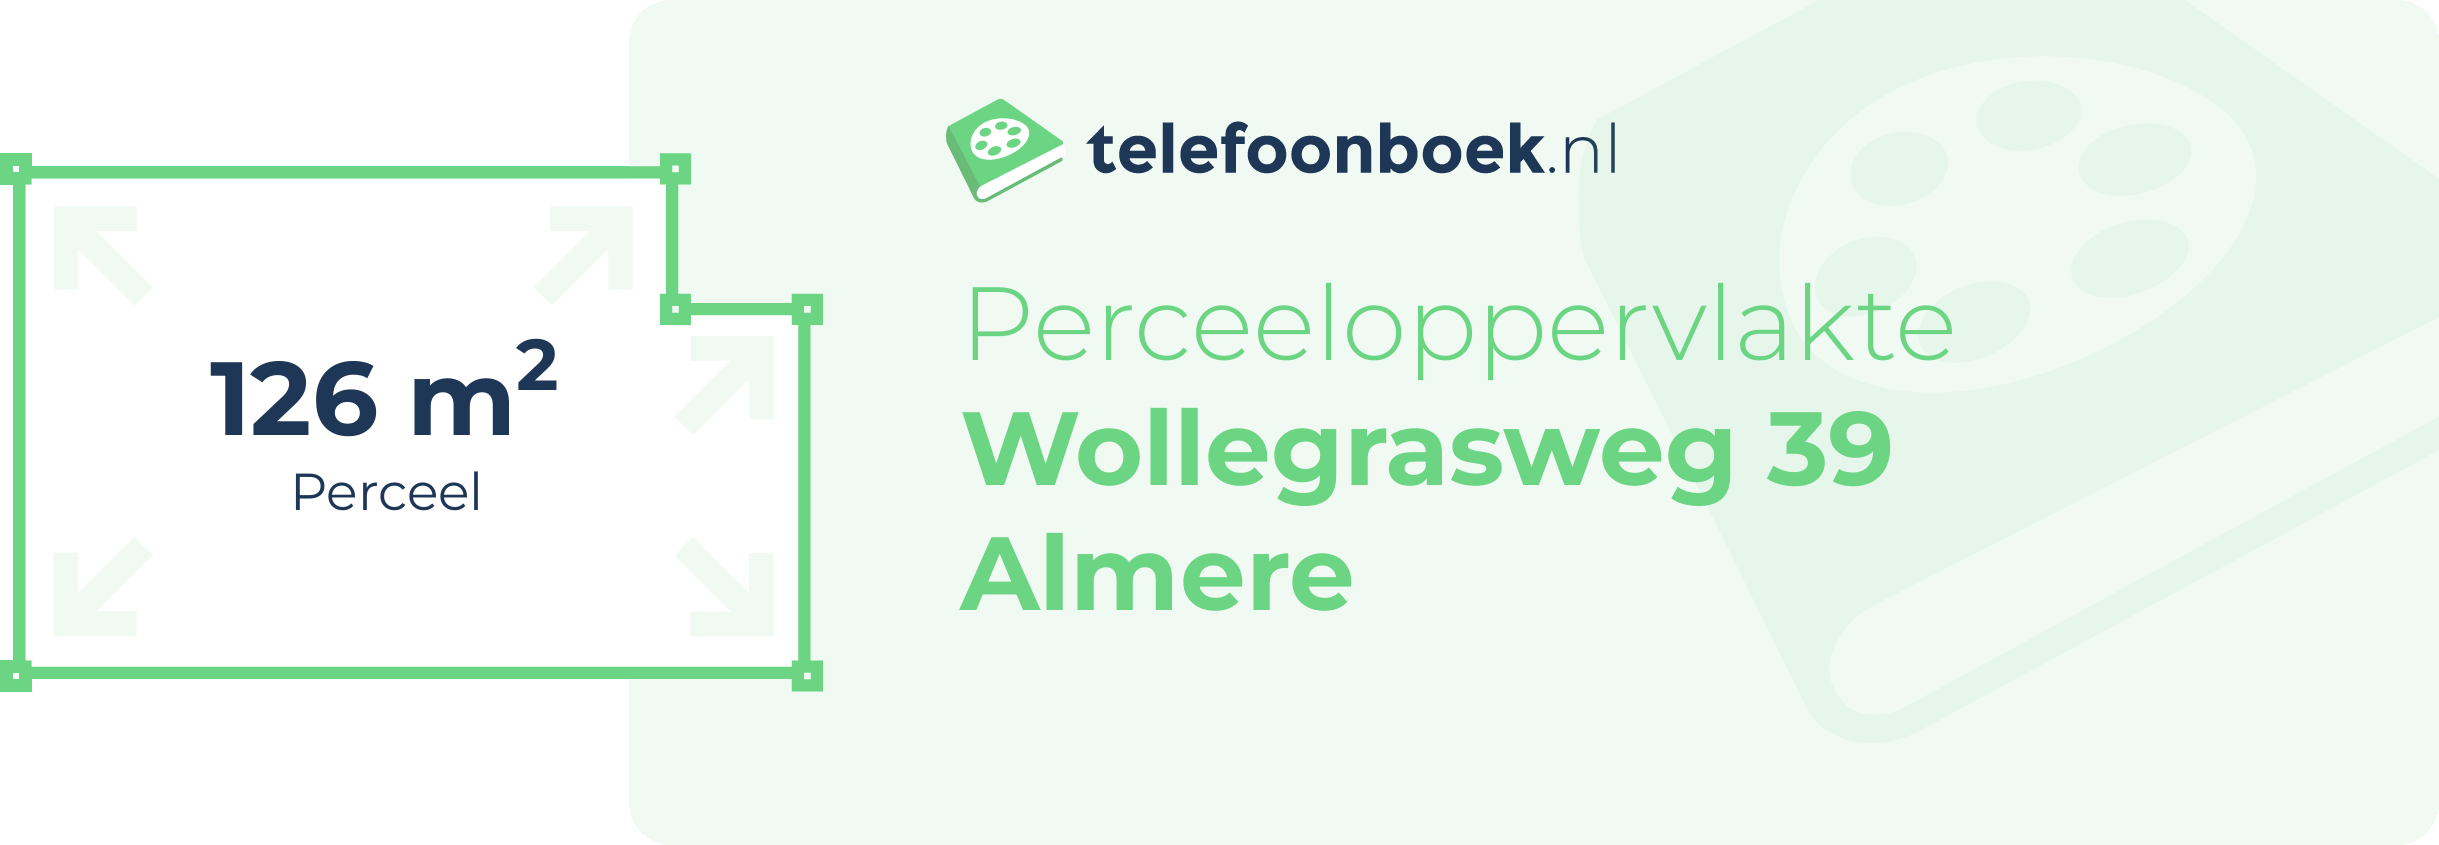 Perceeloppervlakte Wollegrasweg 39 Almere